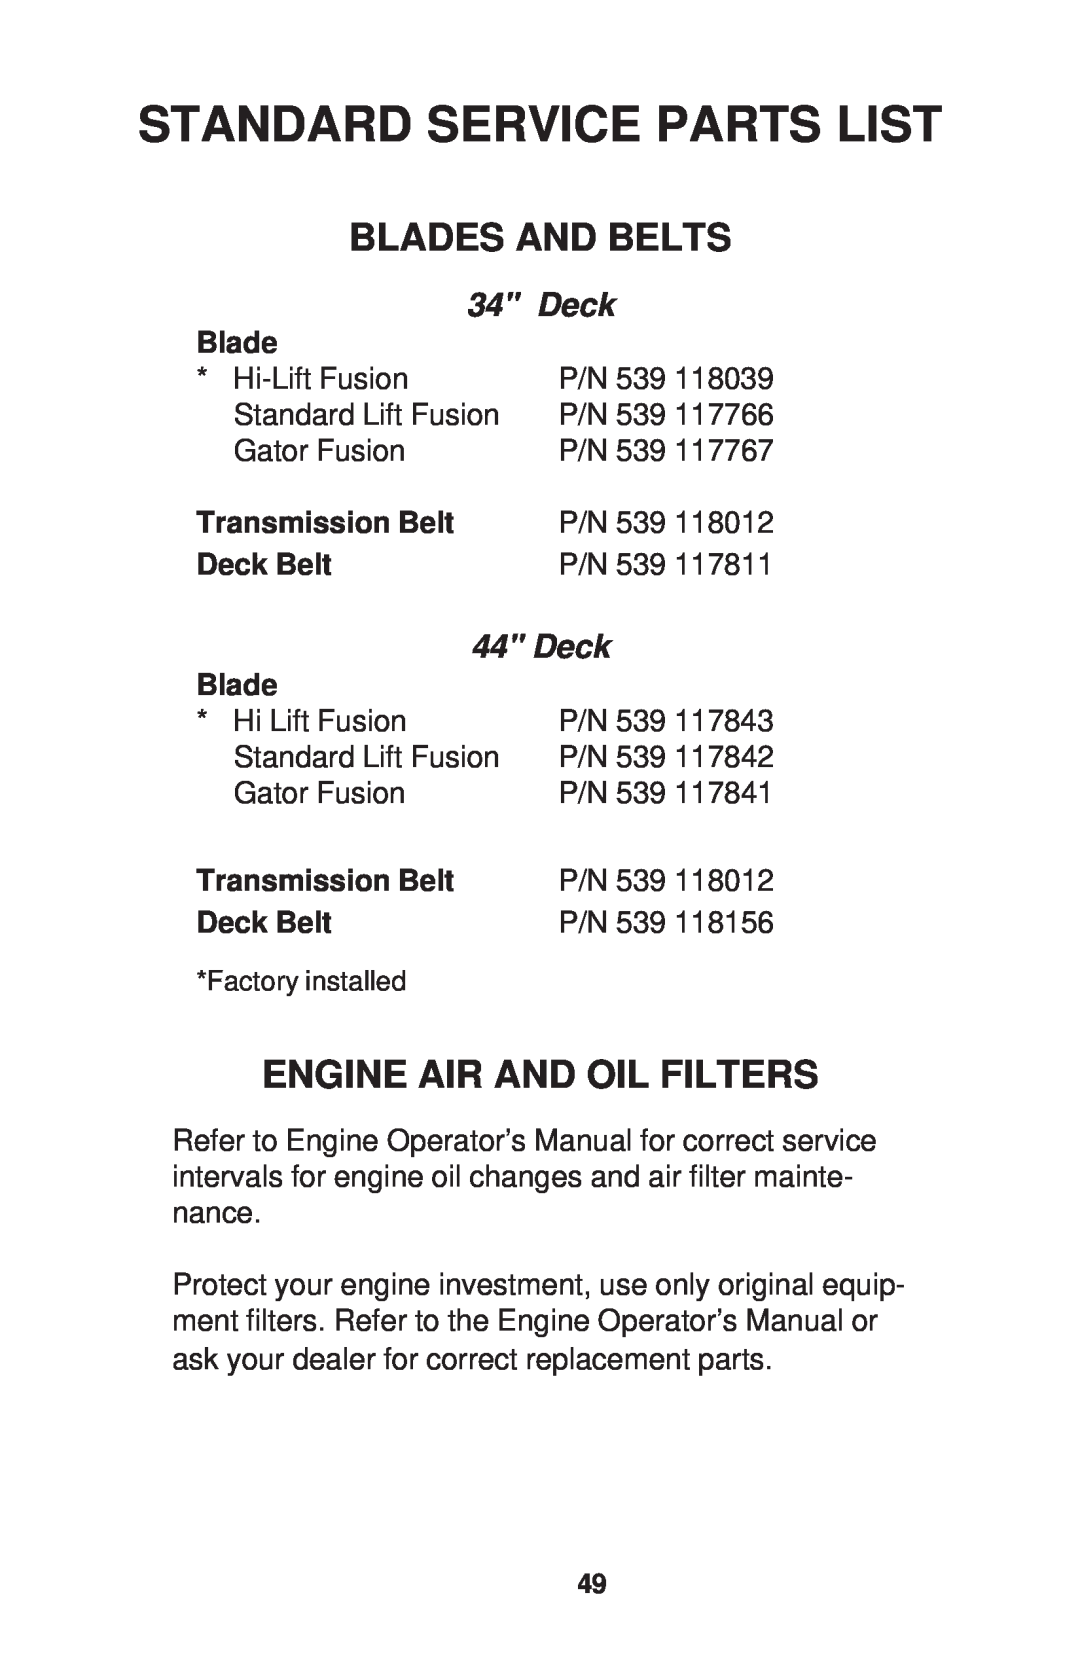 Dixon ZTR 34, ZTR 44, ZTR 34 Standard Service Parts List, Blades And Belts, Engine Air And Oil Filters, Transmission Belt 